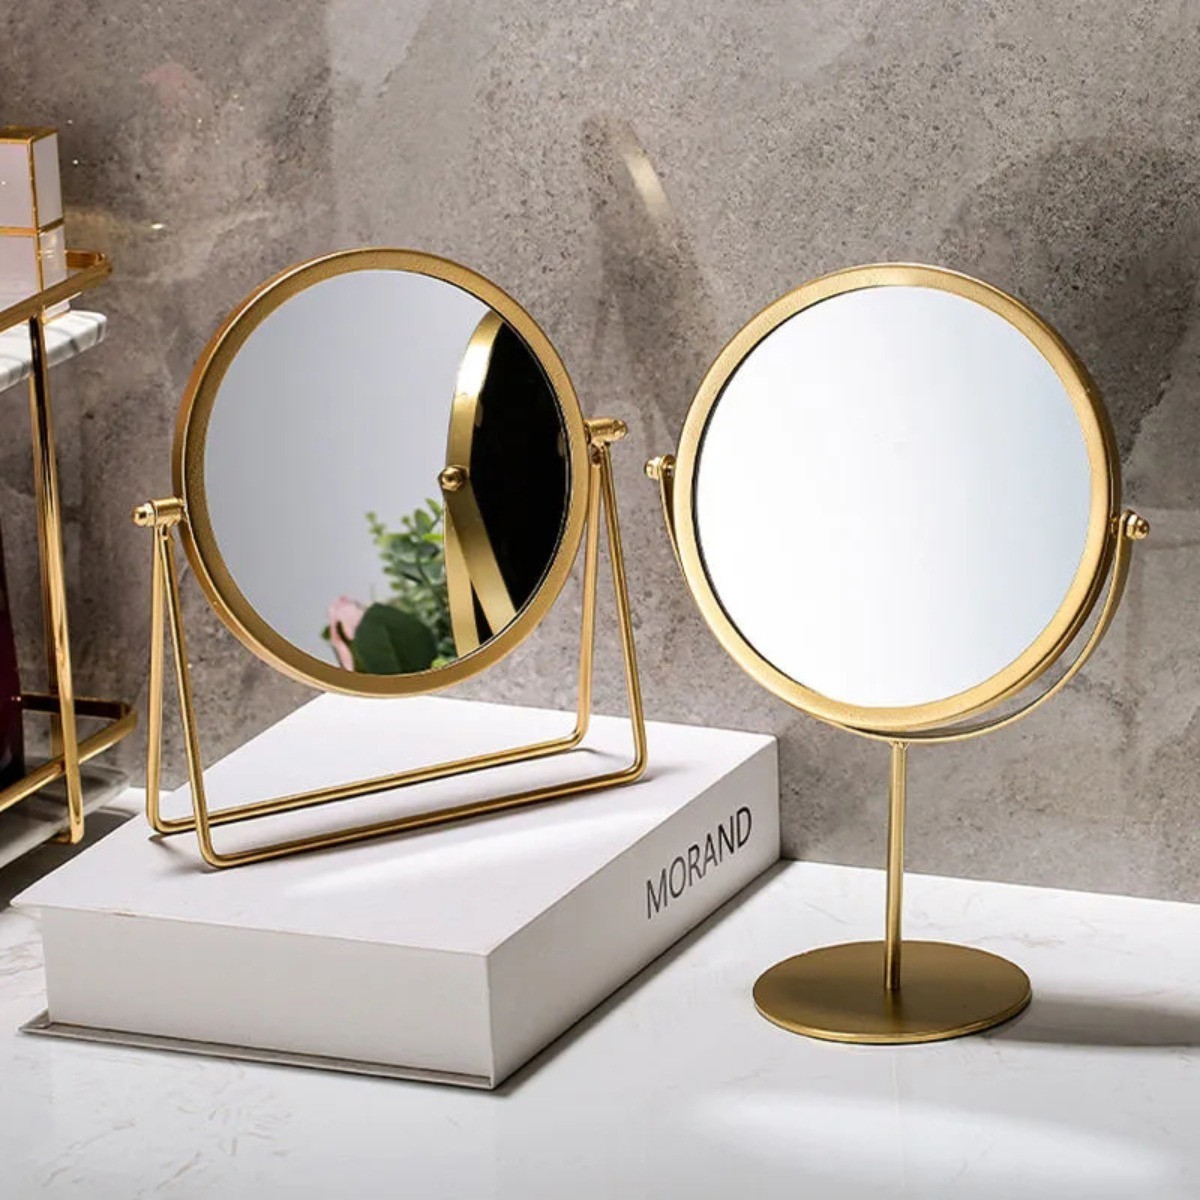  Espejo redondo LED, espejo circular dorado, espejo de tocador,  espejo de entrada, espejo de tocador iluminado, espejo bohemio, espejos de  pared para sala de estar, espejo con luces para maquillaje (color